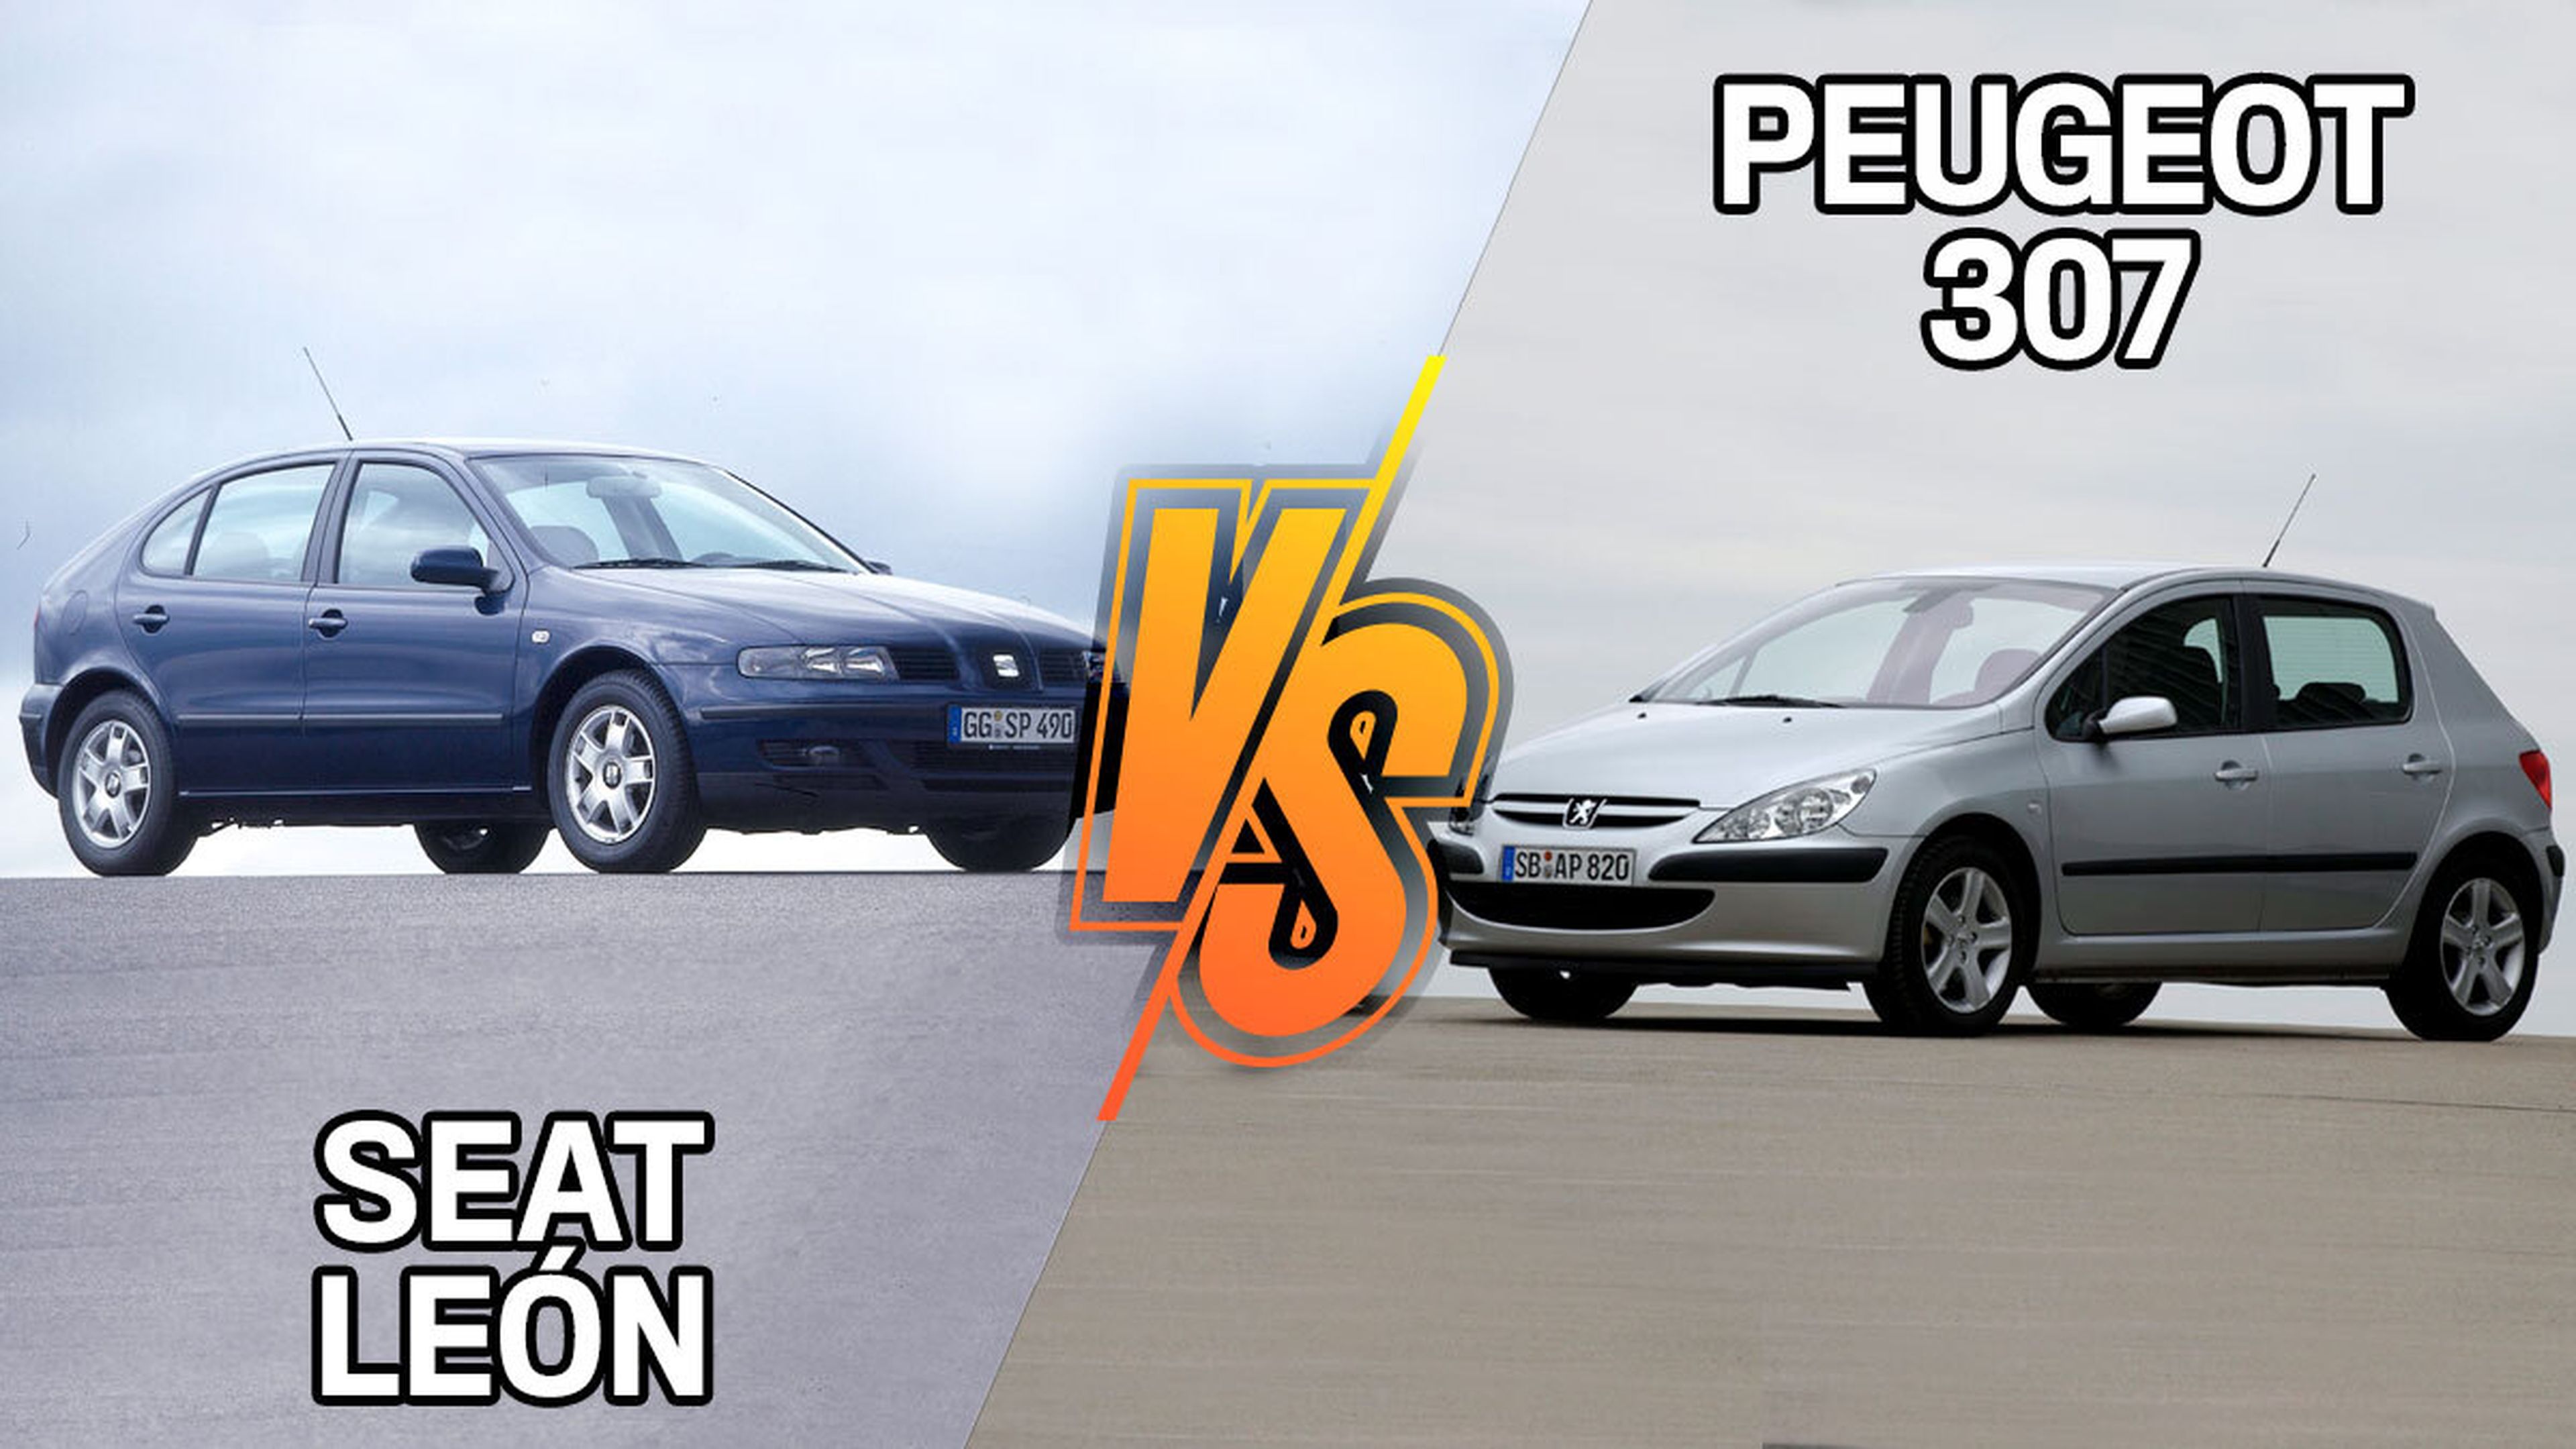 Segunda mano: ¿Peugeot 307 o Seat León?